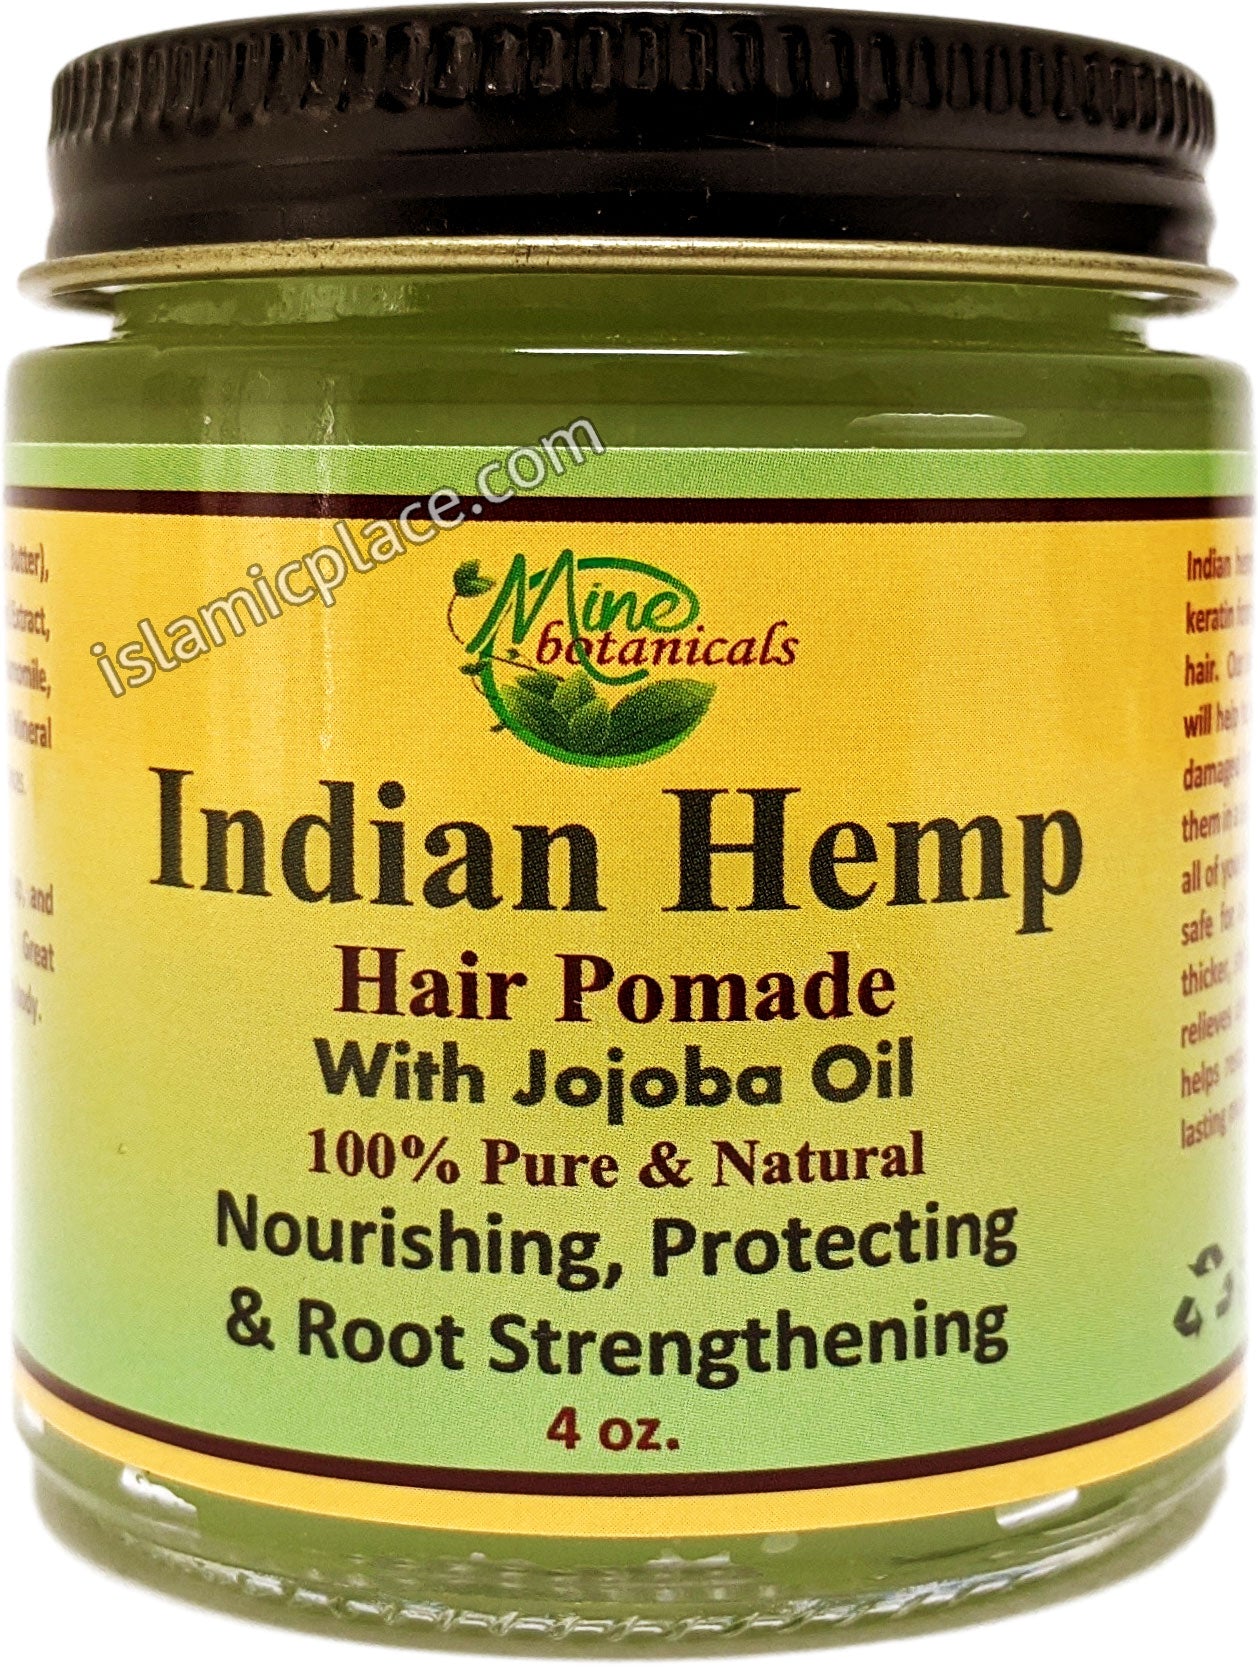 Indian Hemp Hair Pomade with Jojoba Oil